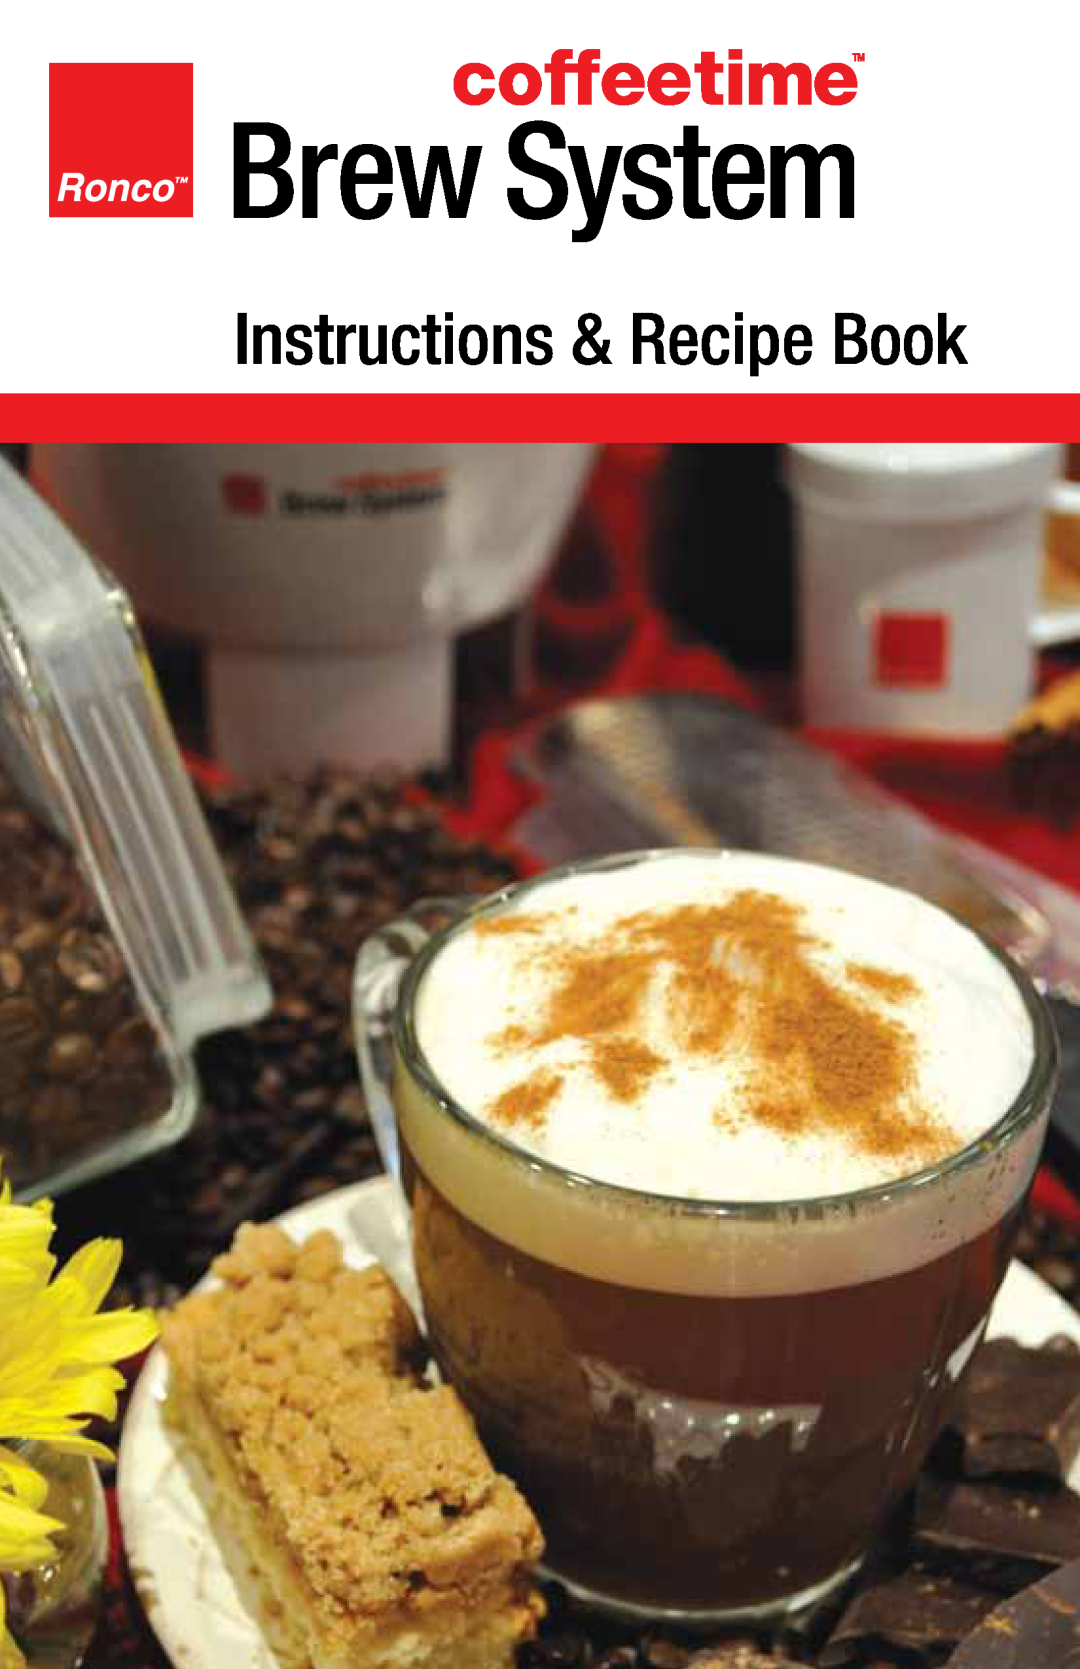 Ronco Coffeemaker manual Instructions & Recipe Book 